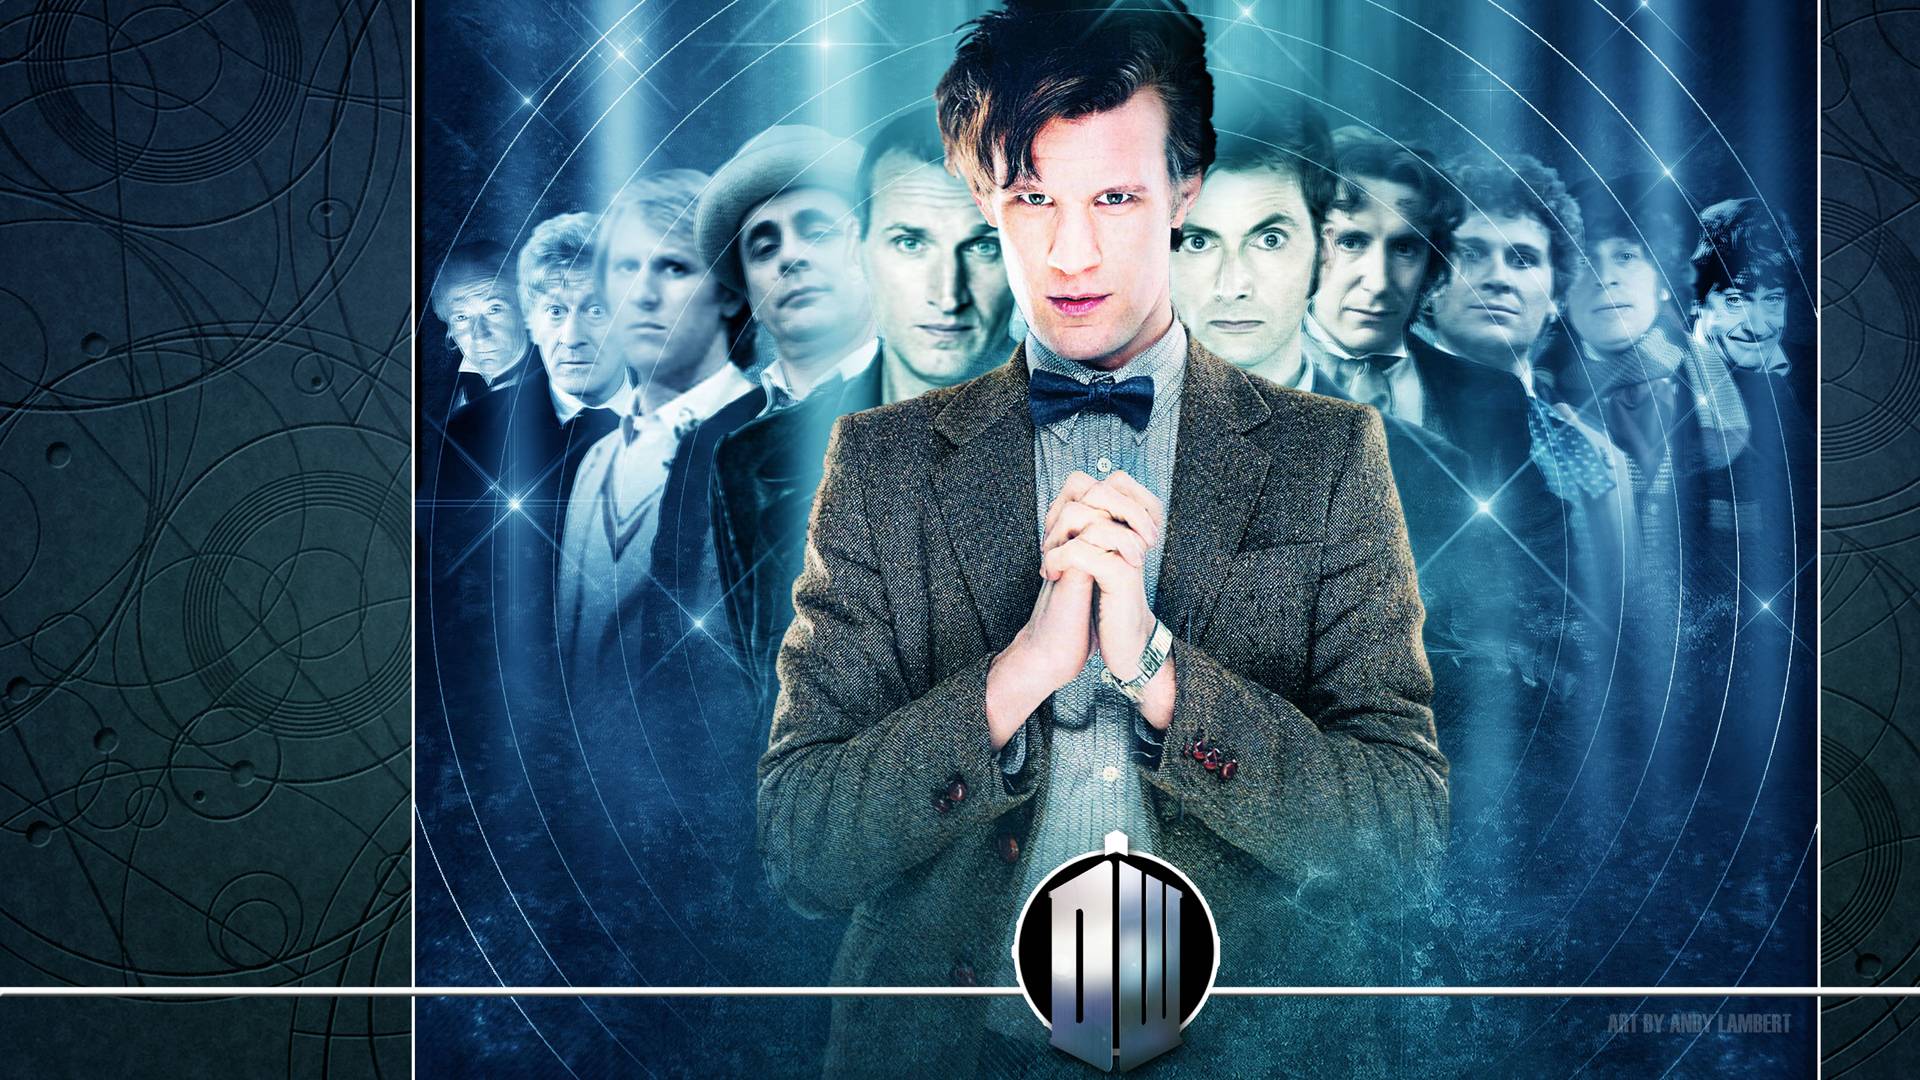 11th Doctor Matt Smith Wallpaper Image & Picture